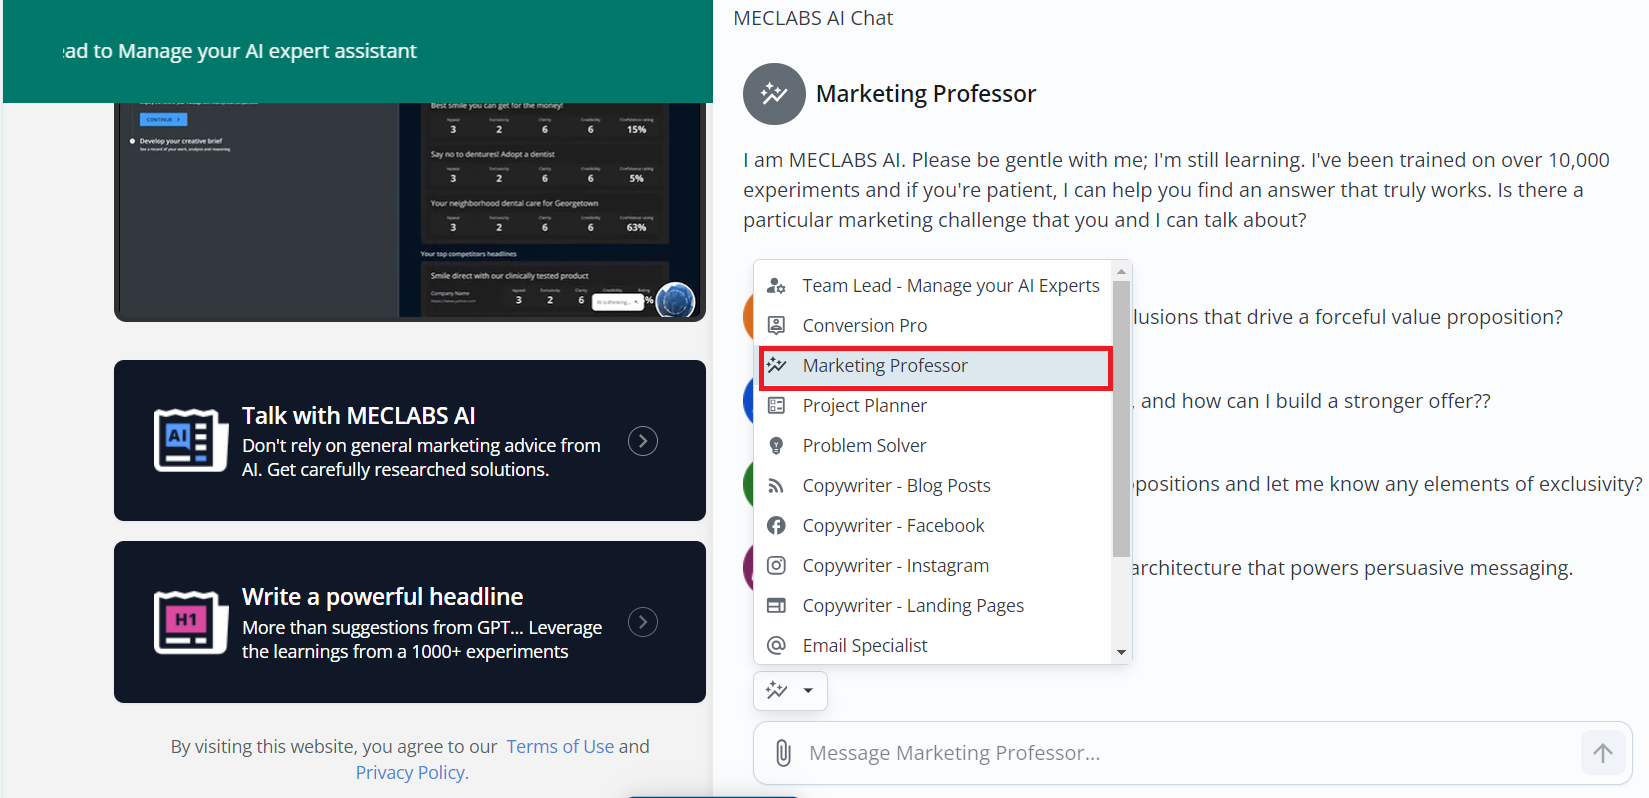 MeclabsAI-marketing professor